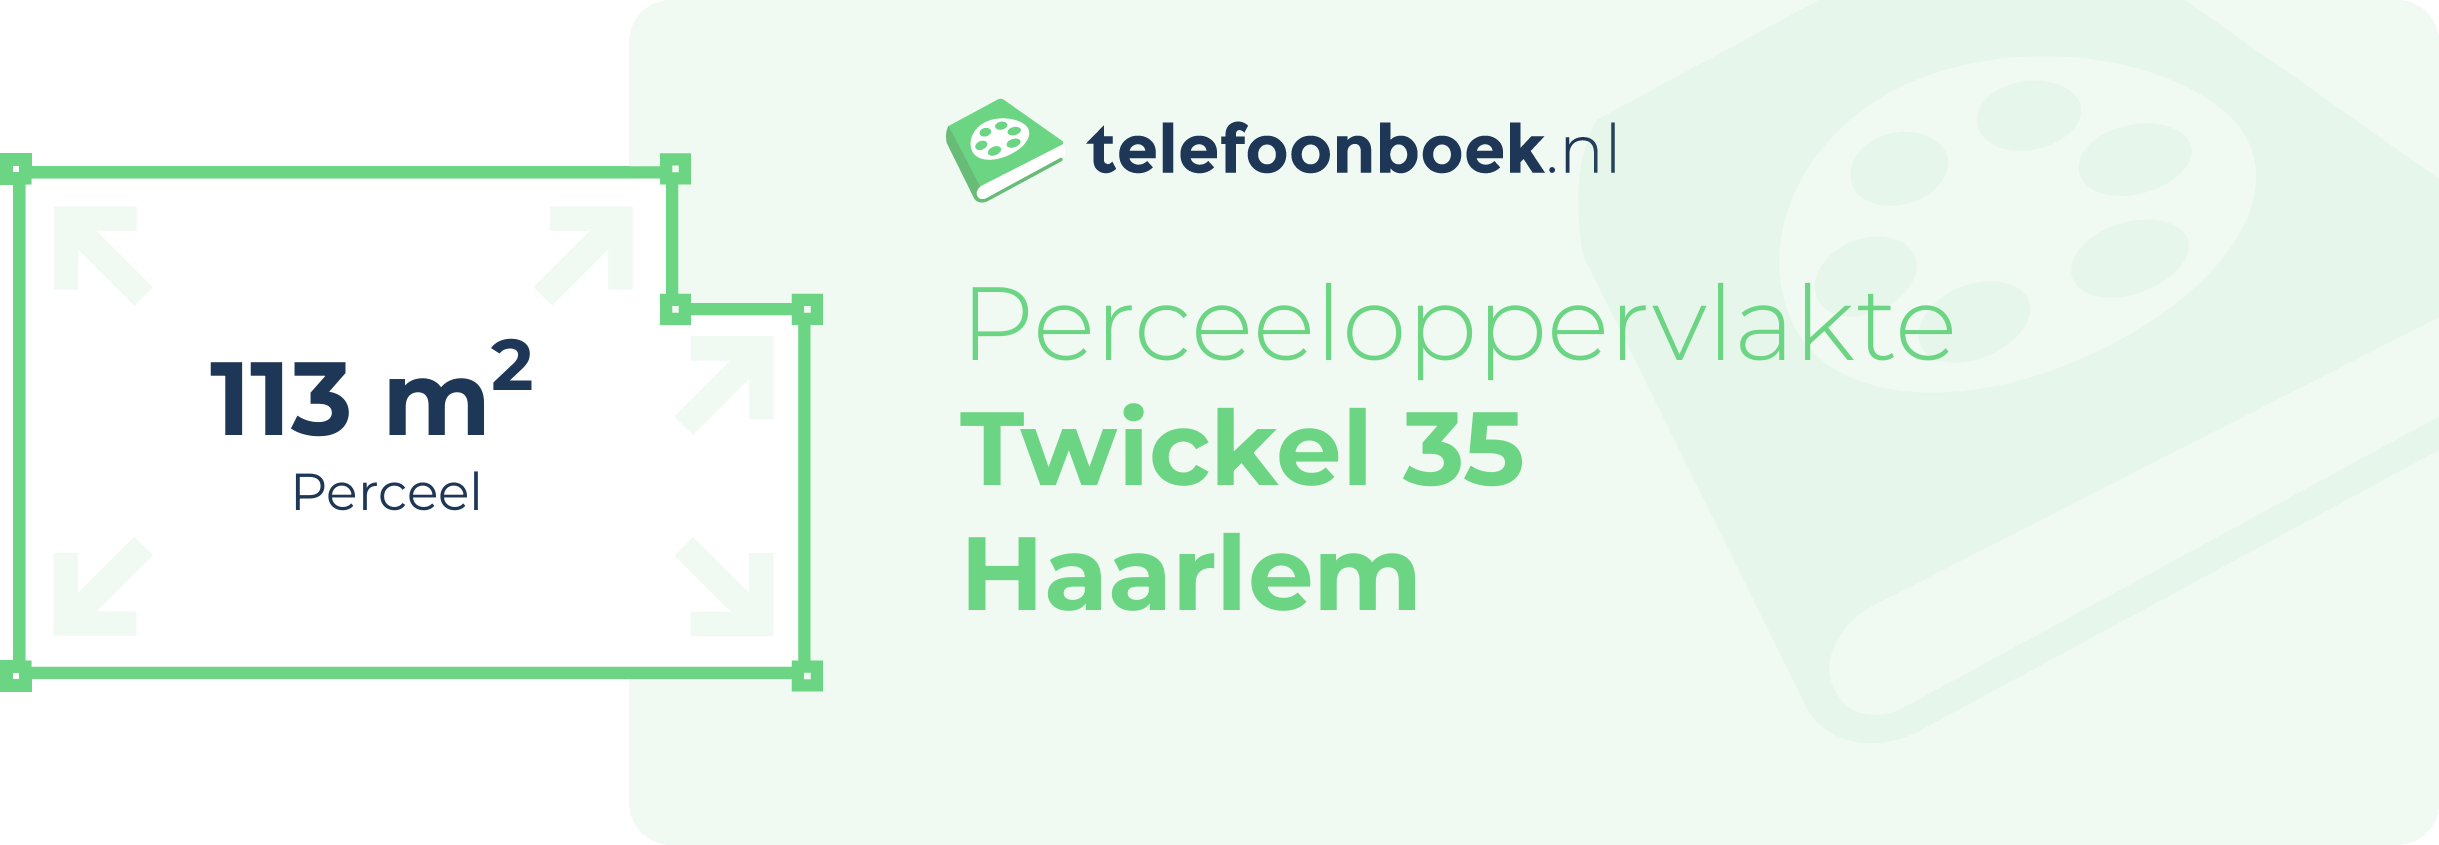 Perceeloppervlakte Twickel 35 Haarlem